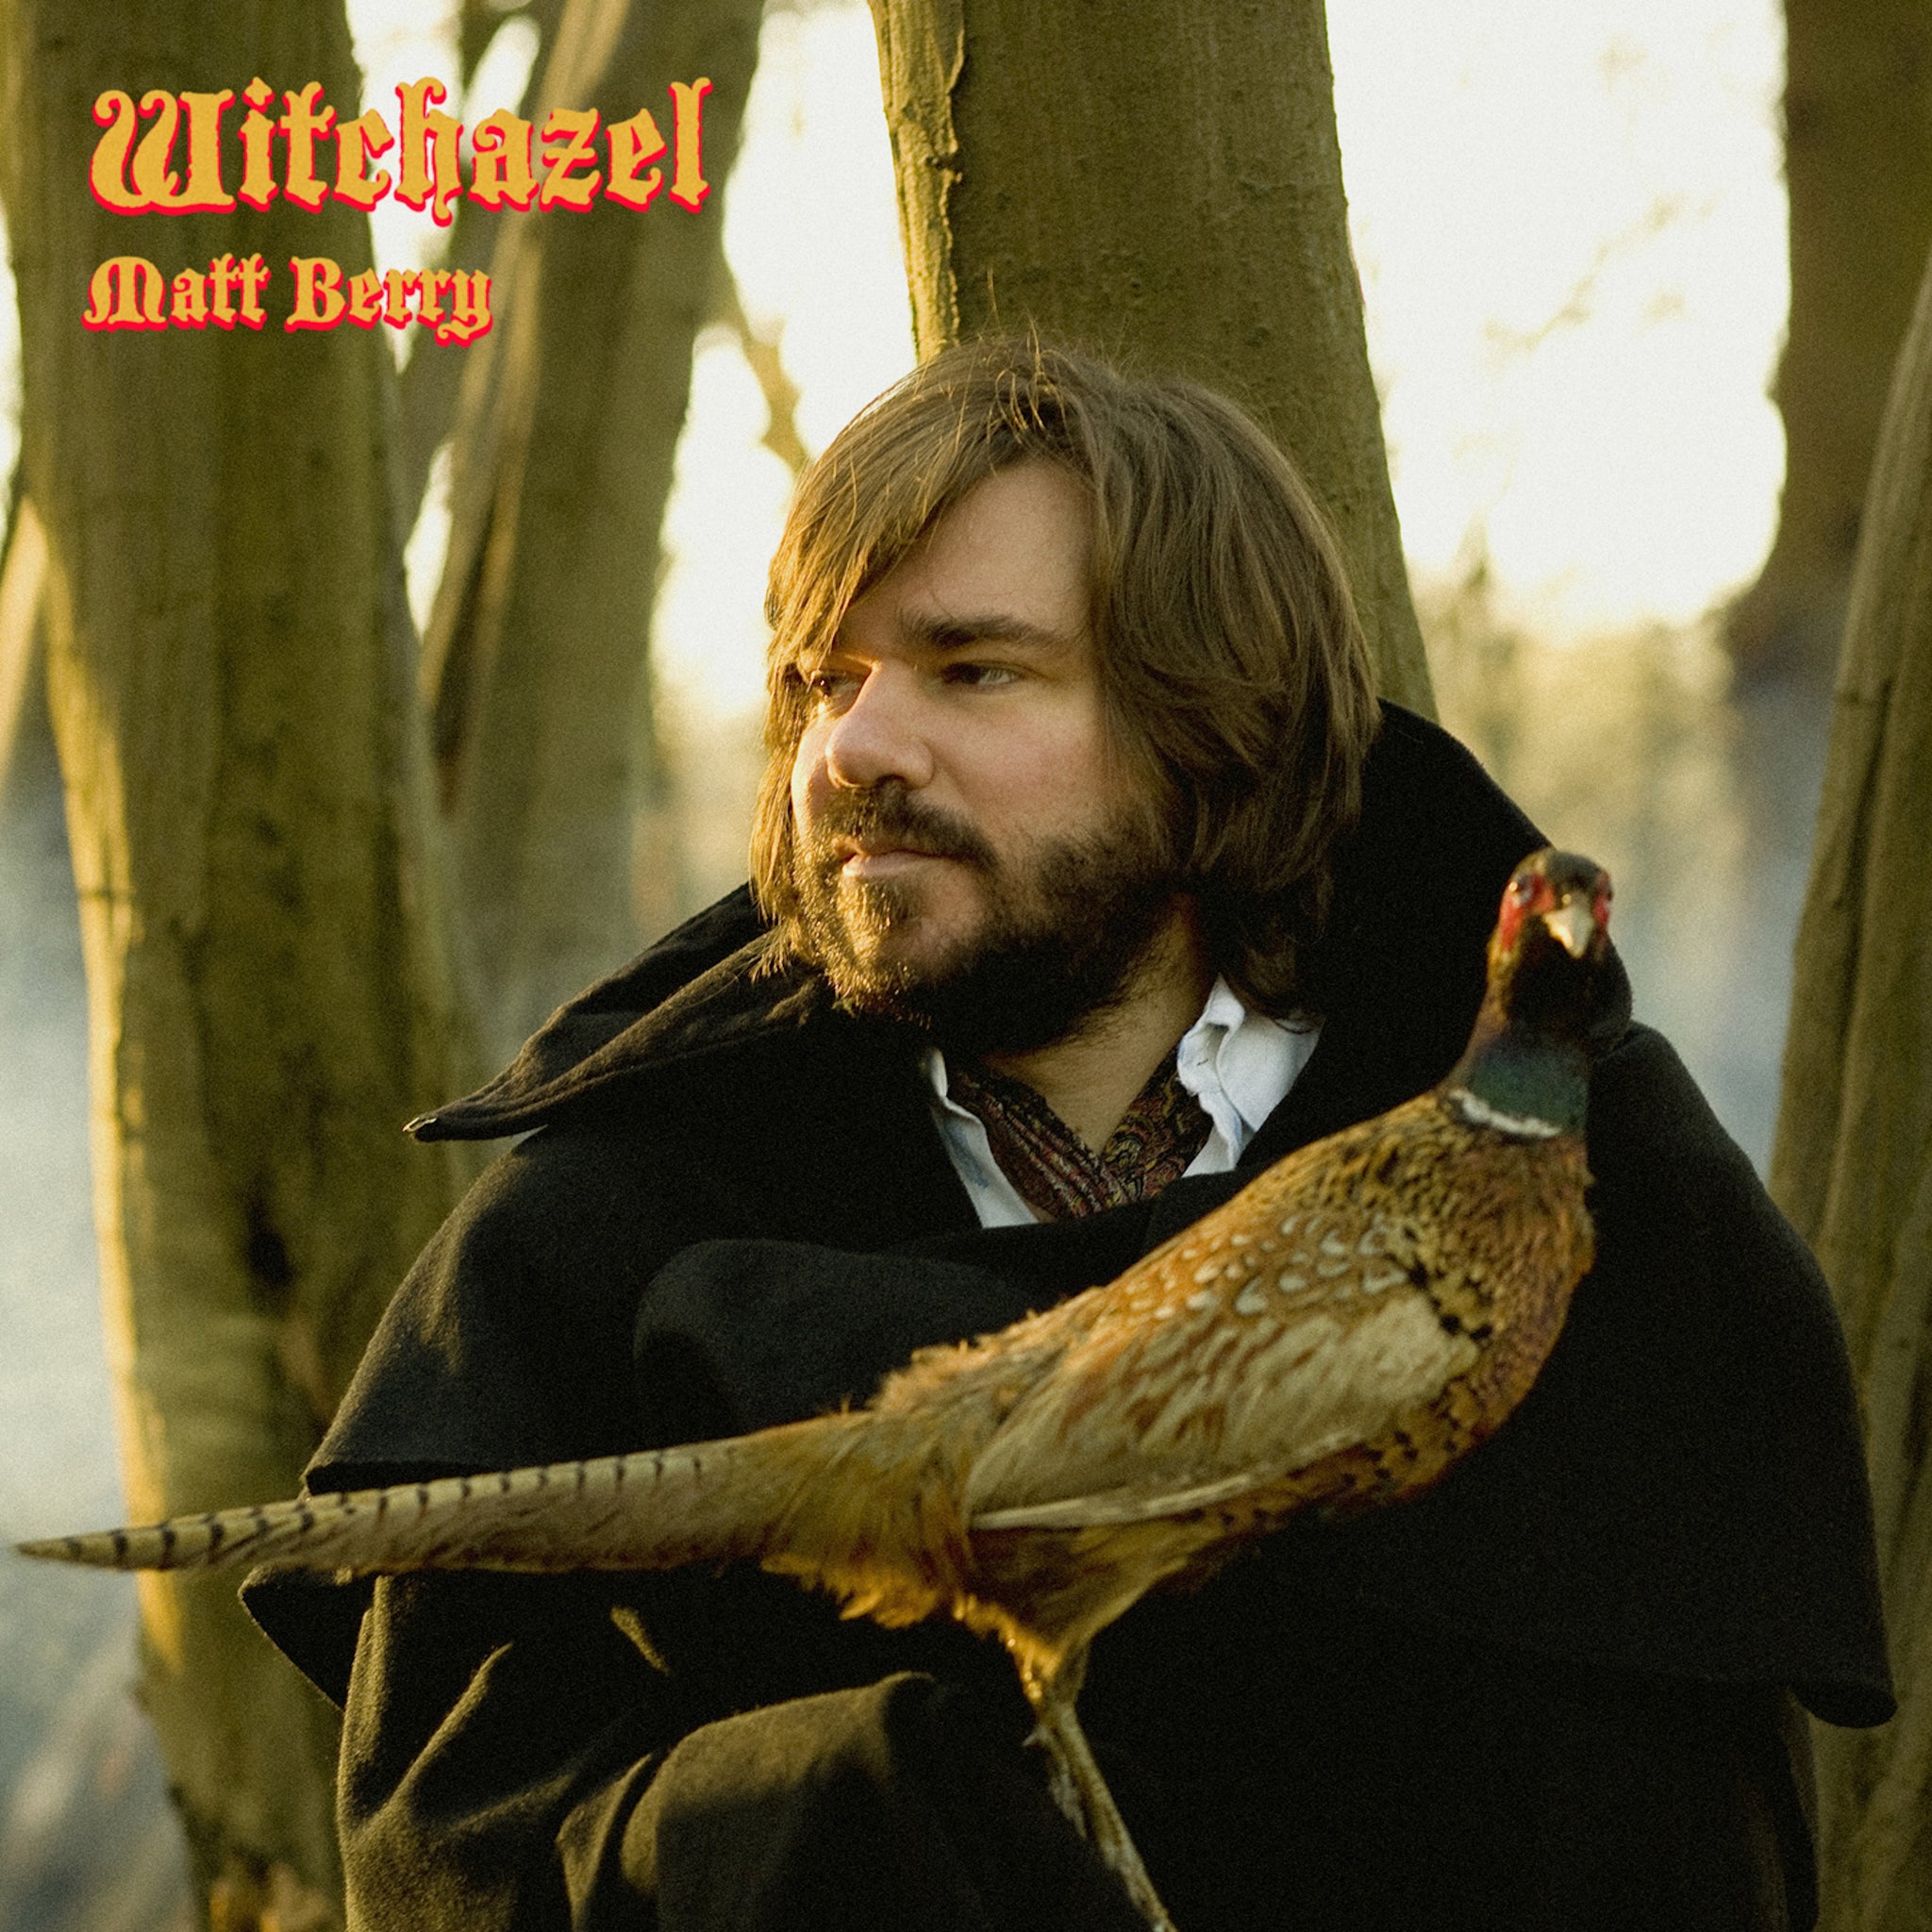 Matt Berry - Witchazel (Caramel Vinyl)